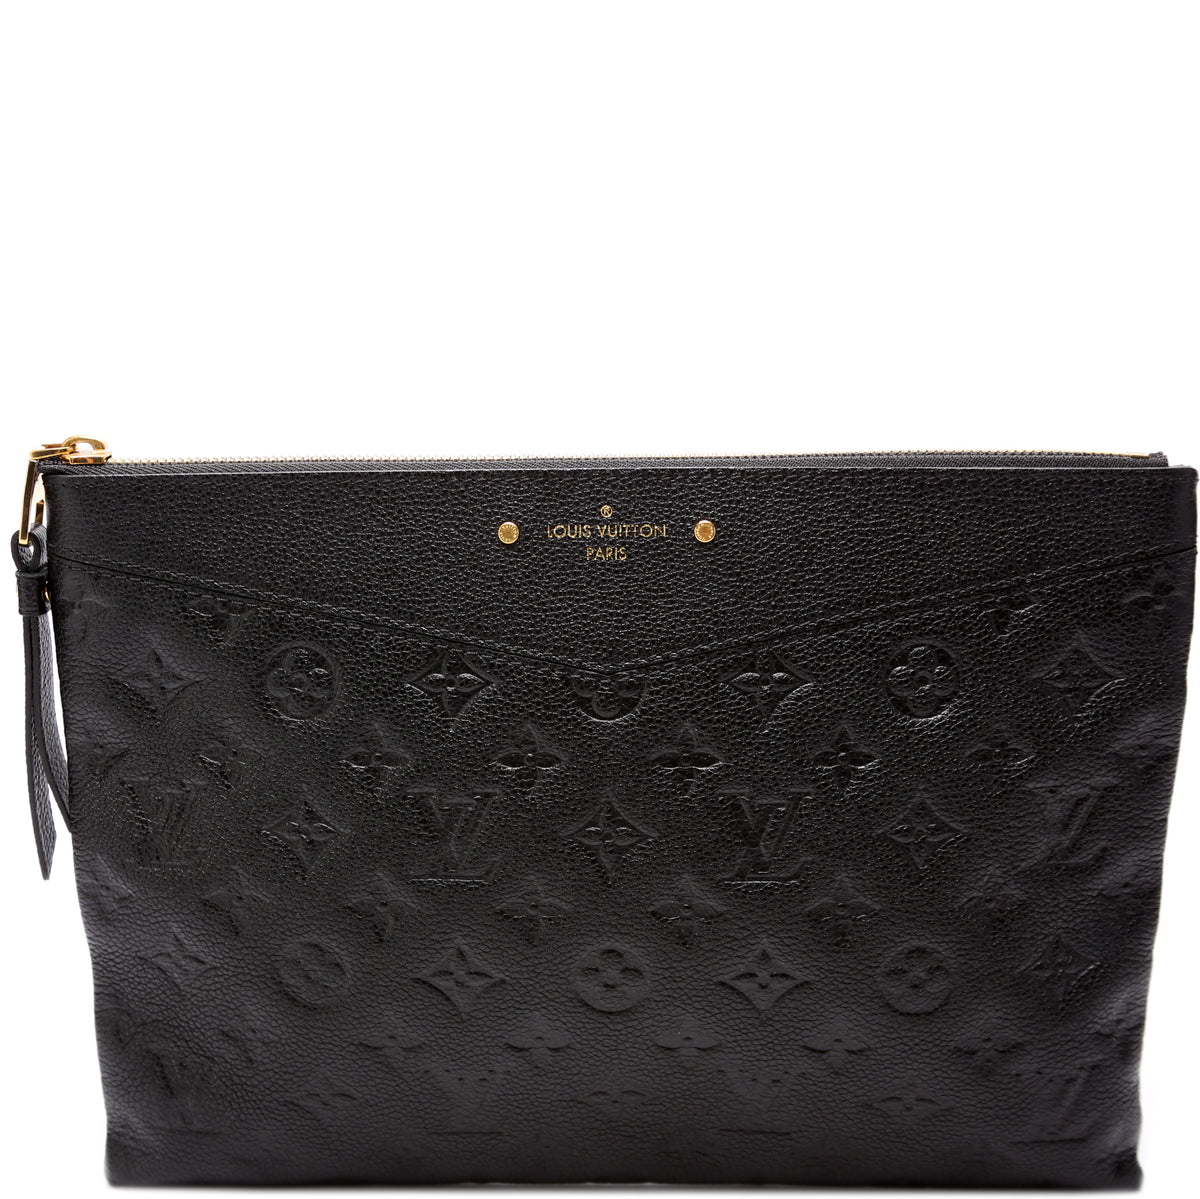 Louis Vuitton Empreinte Leather Exterior Clutch Bags & Handbags